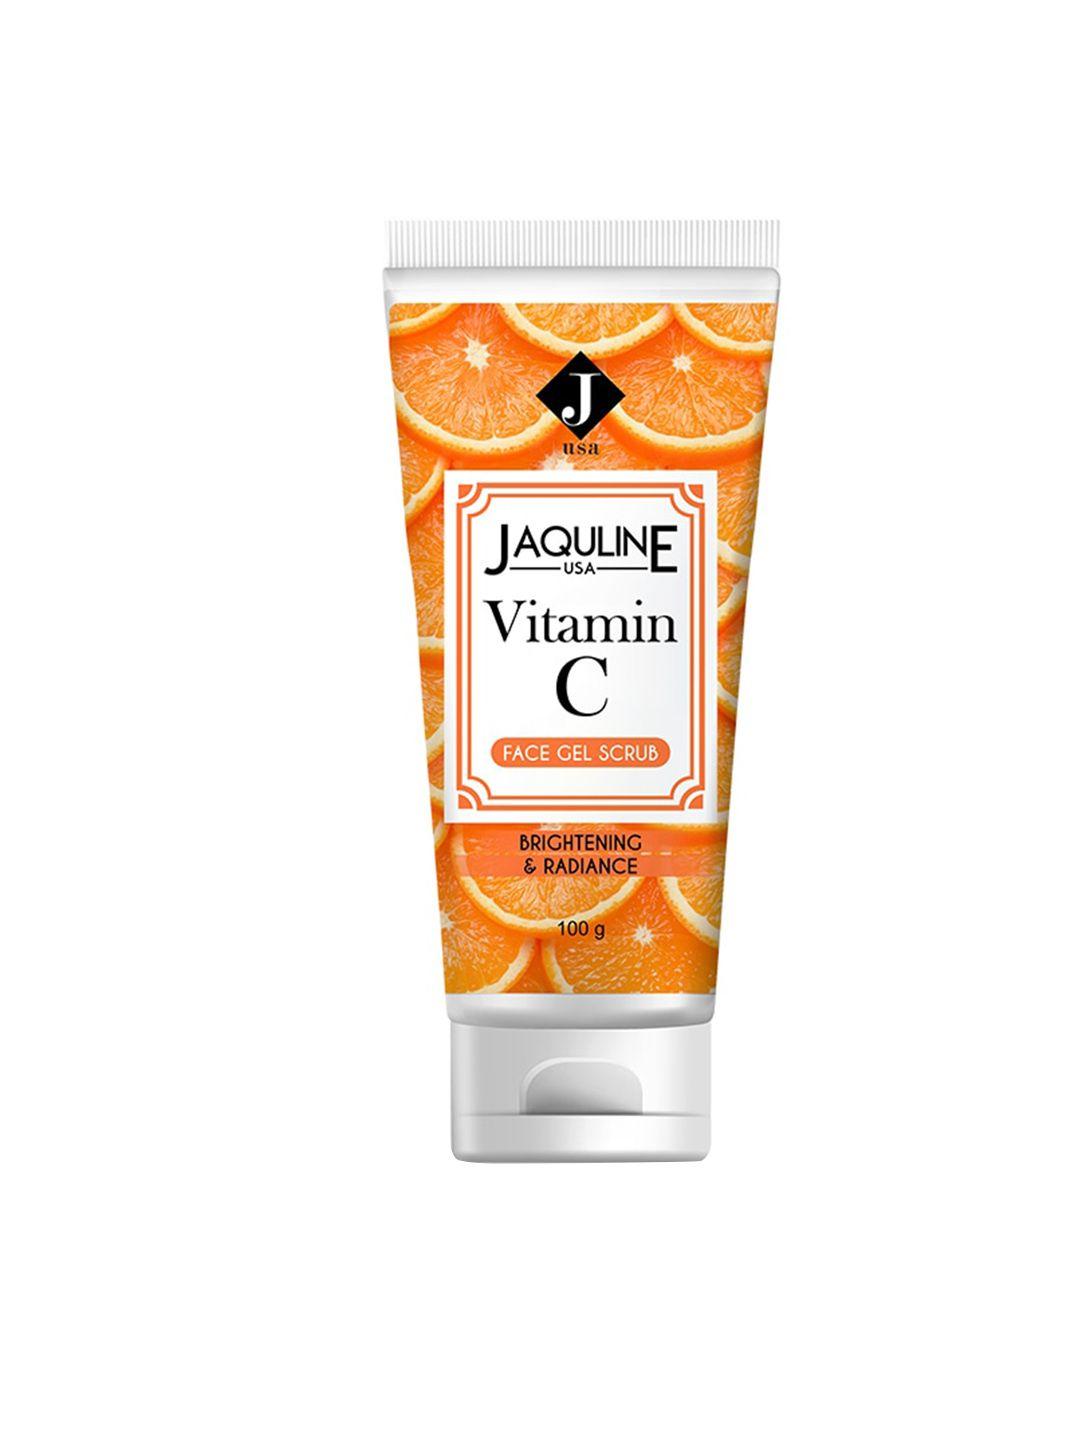 jaquline usa vitamin c face gel scrub for brightening & radiance with walnut shell - 100 g